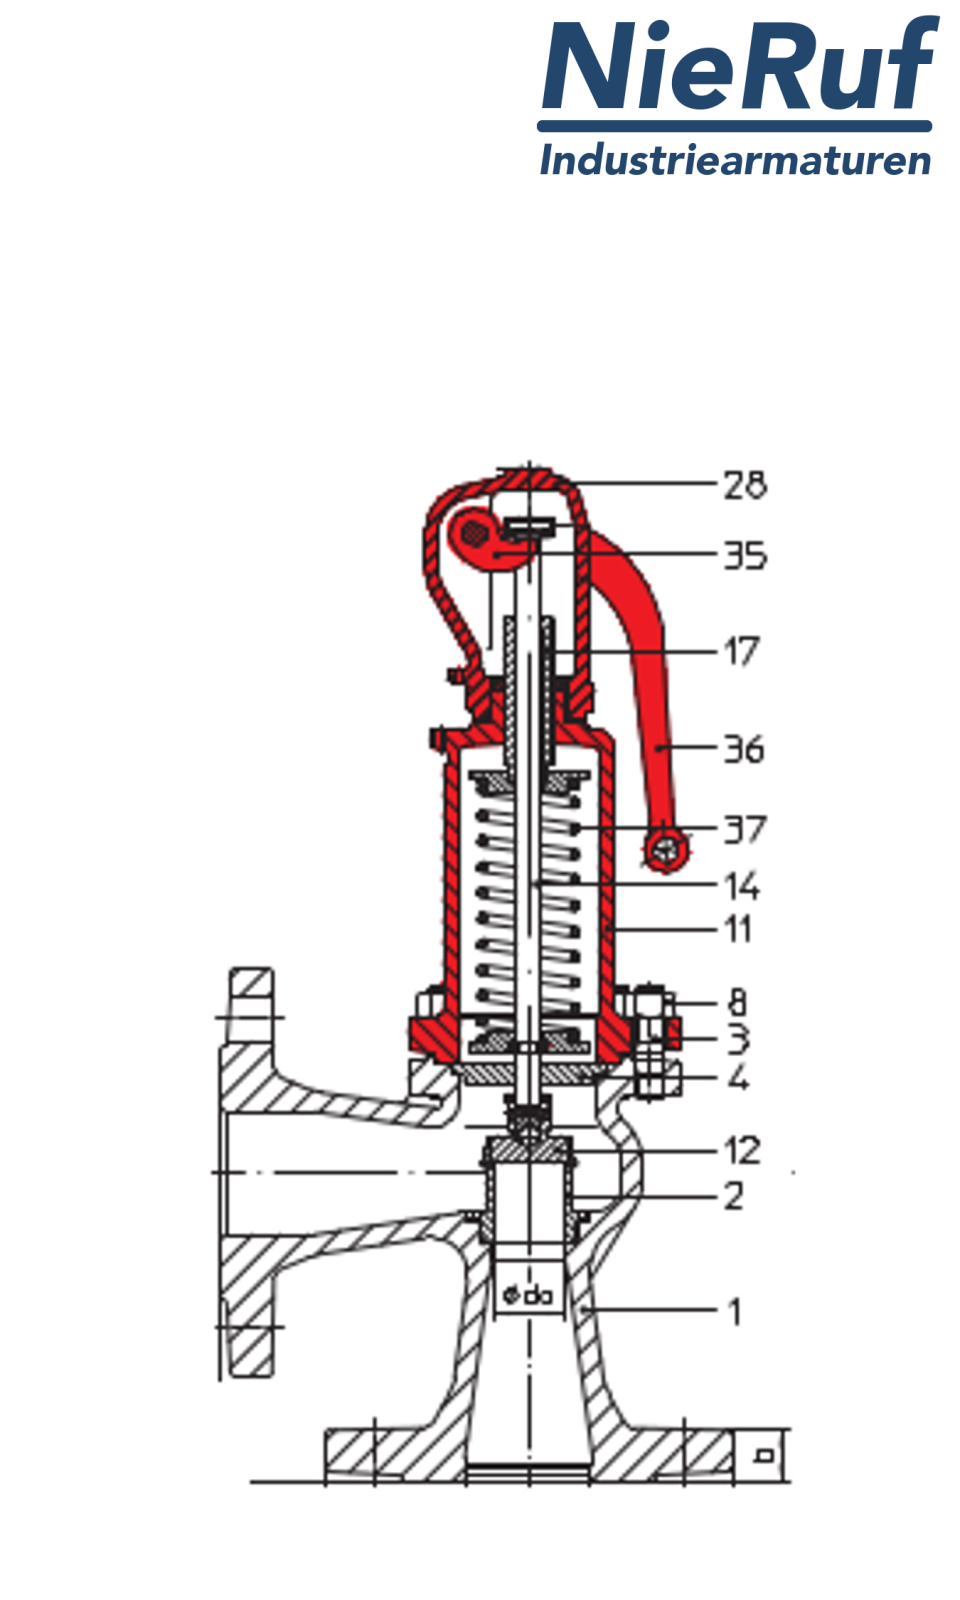 flange-safety valve DN100/DN100 SF01, cast iron EN-JL1040 FPM, with lever